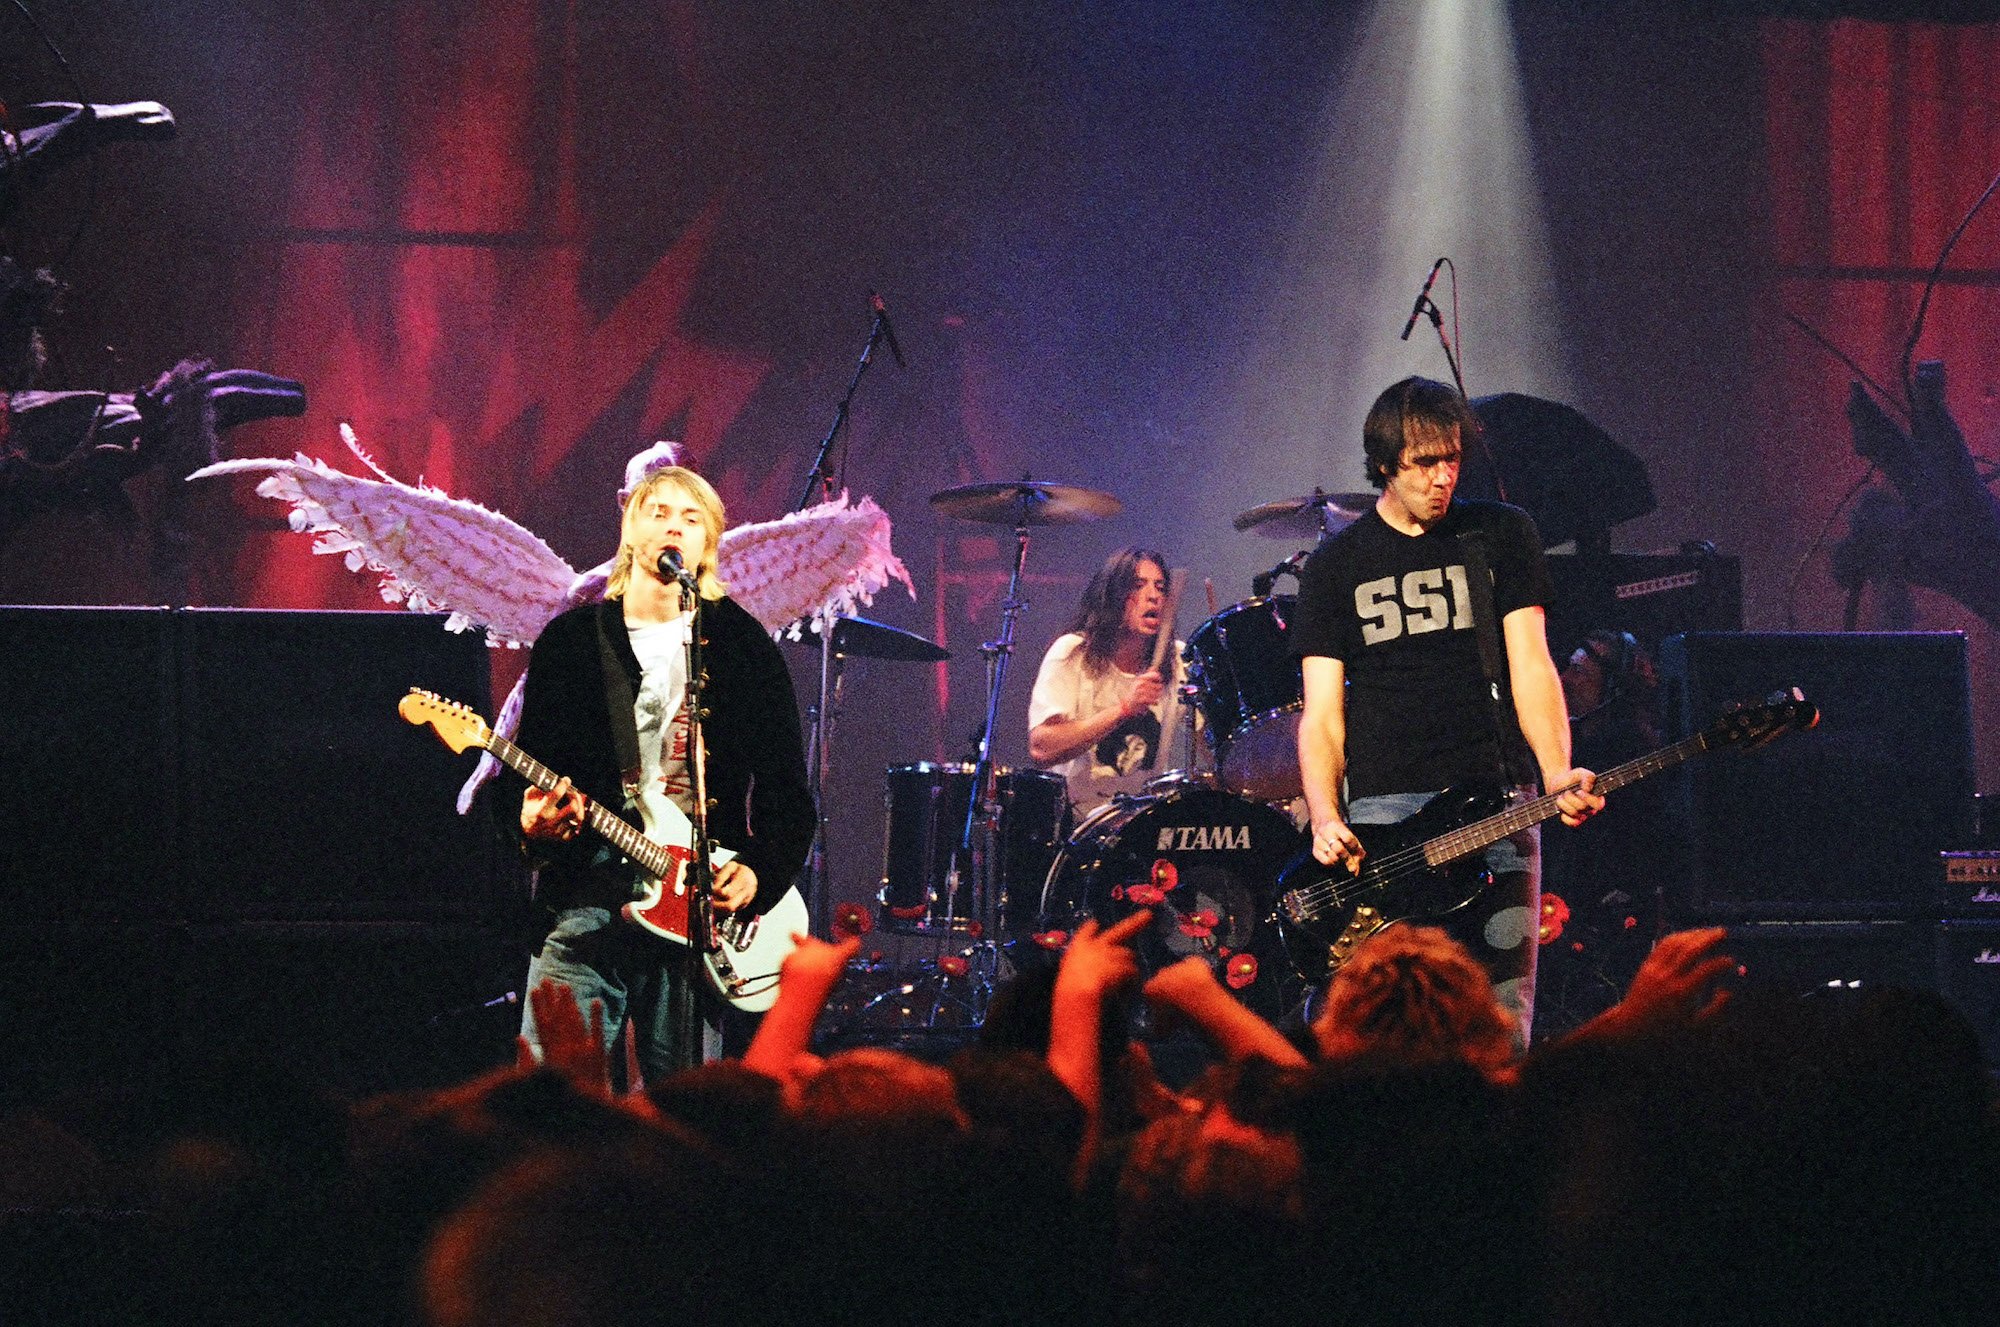 Nirvana perfomring on stage